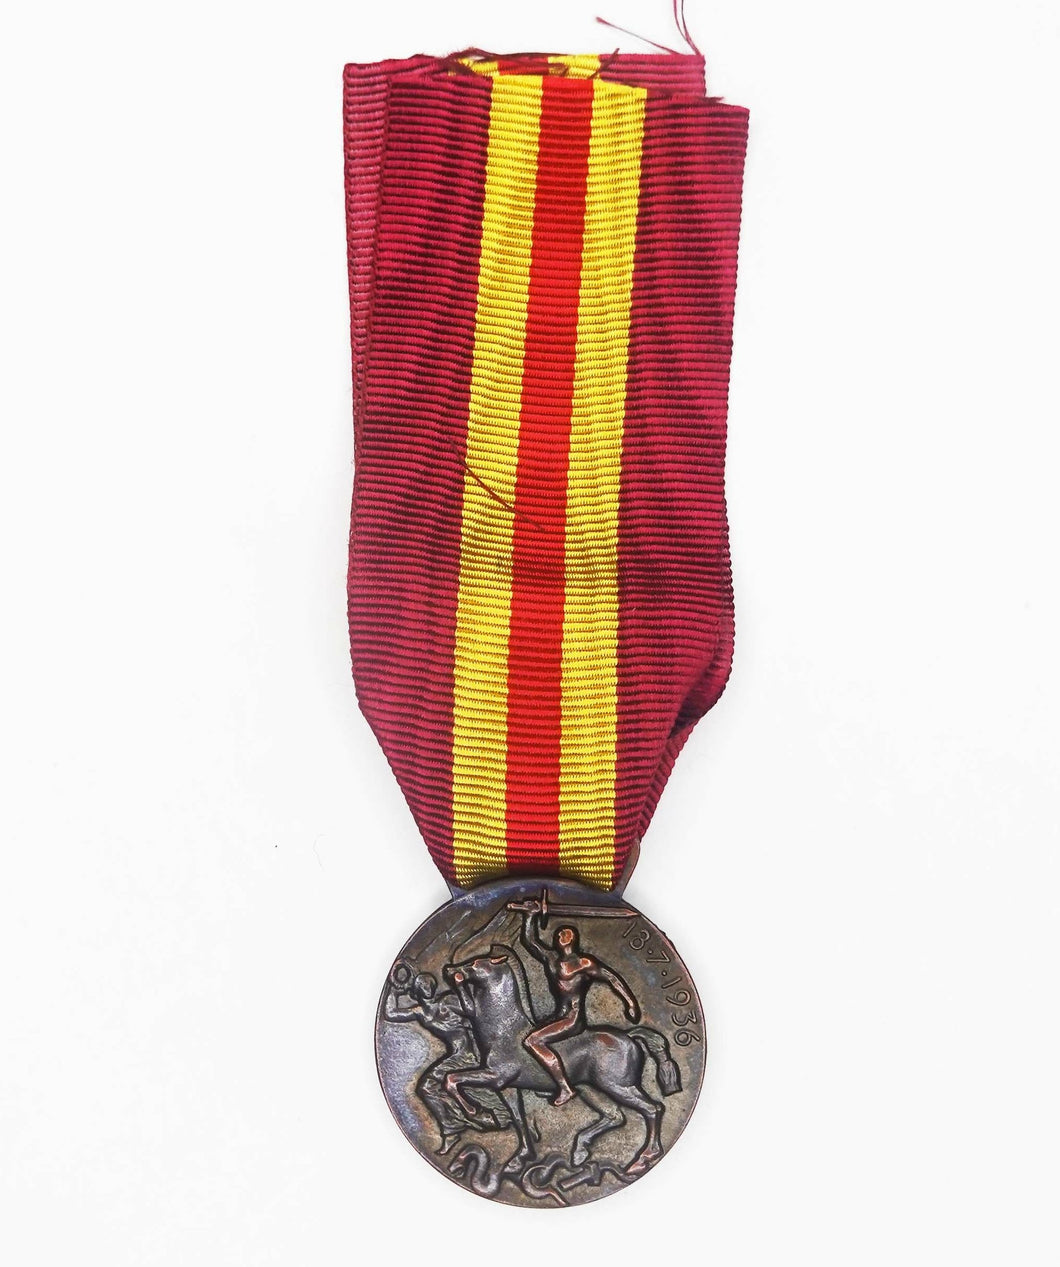 WW2 Riproduzione Medaglia Volontari Guerra In Spagna